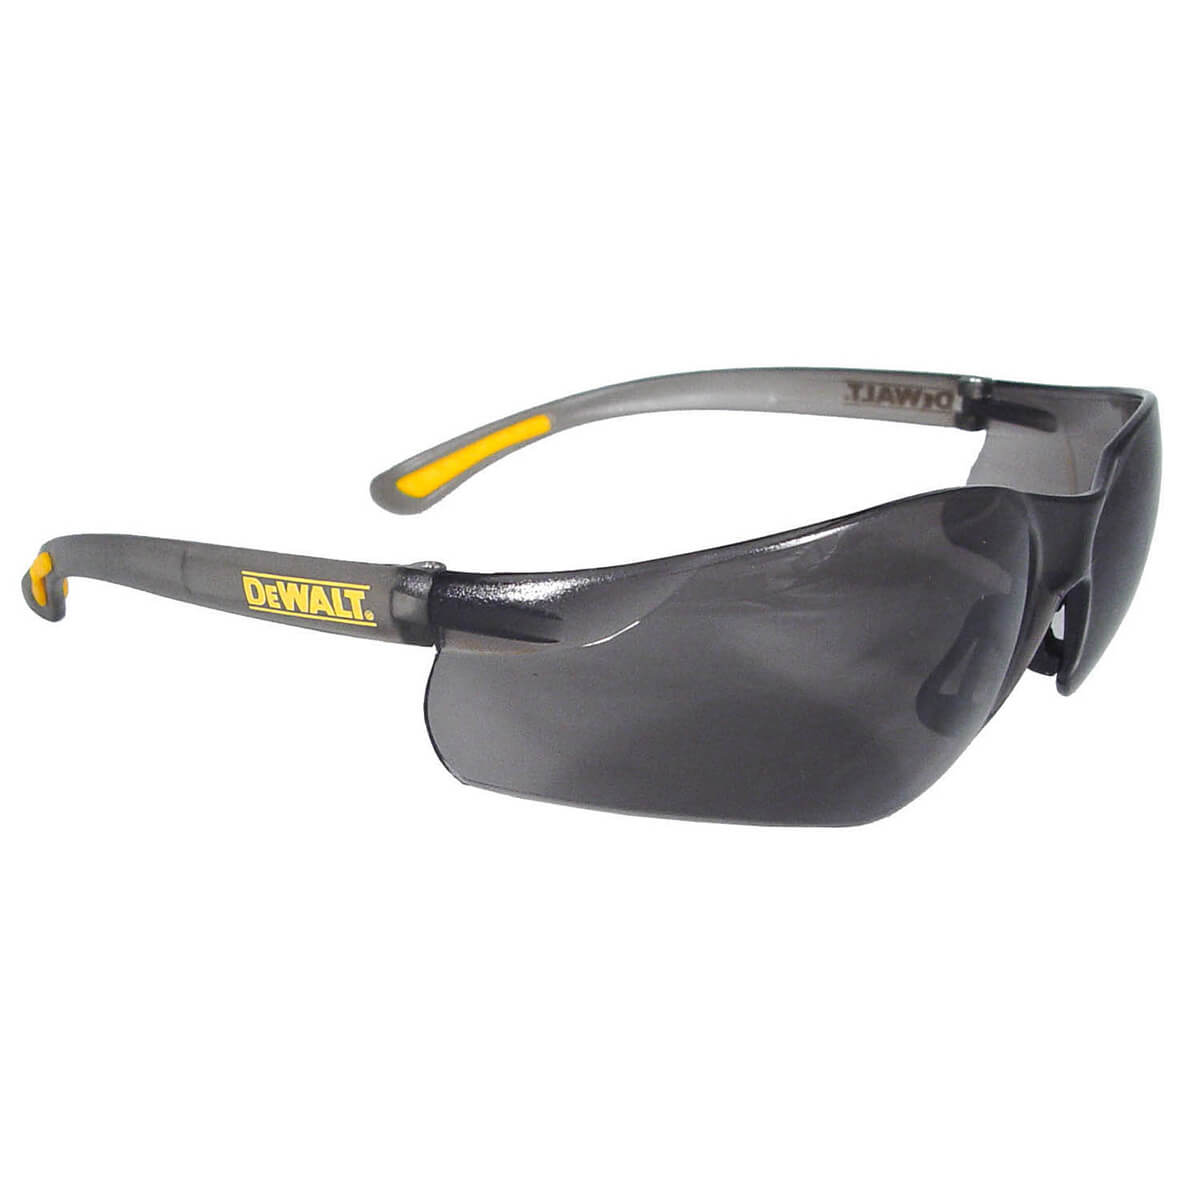 DeWALT Contractor Pro Safety Glasses - Smoke